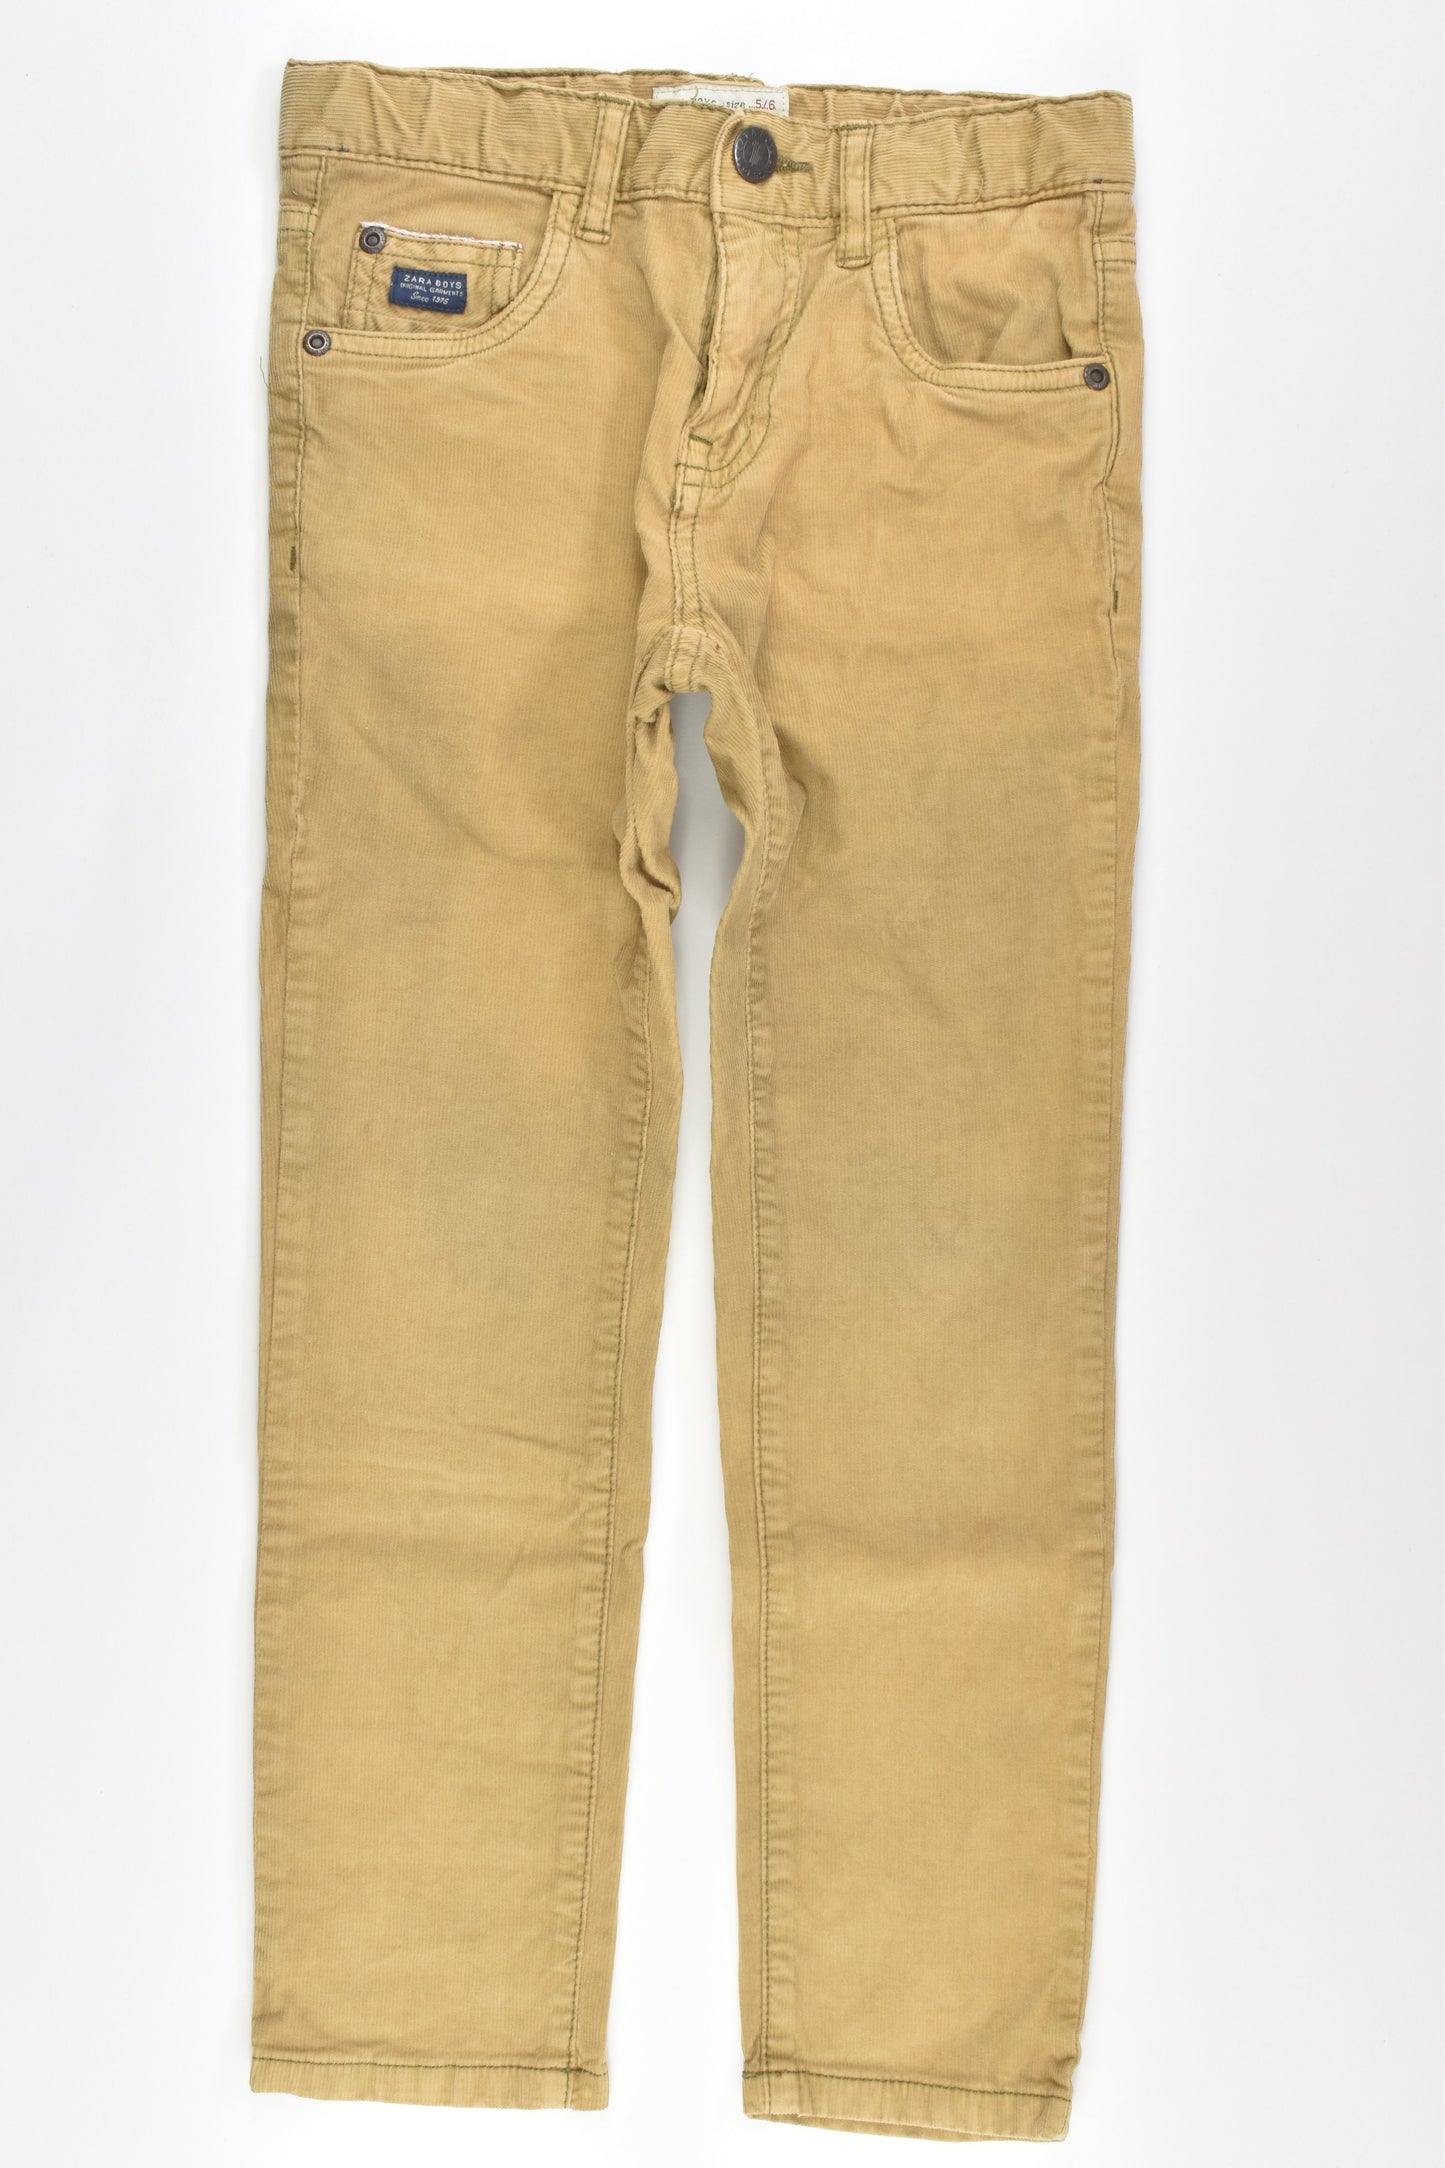 Zara Boys Size 5/6 (116 cm) Pants